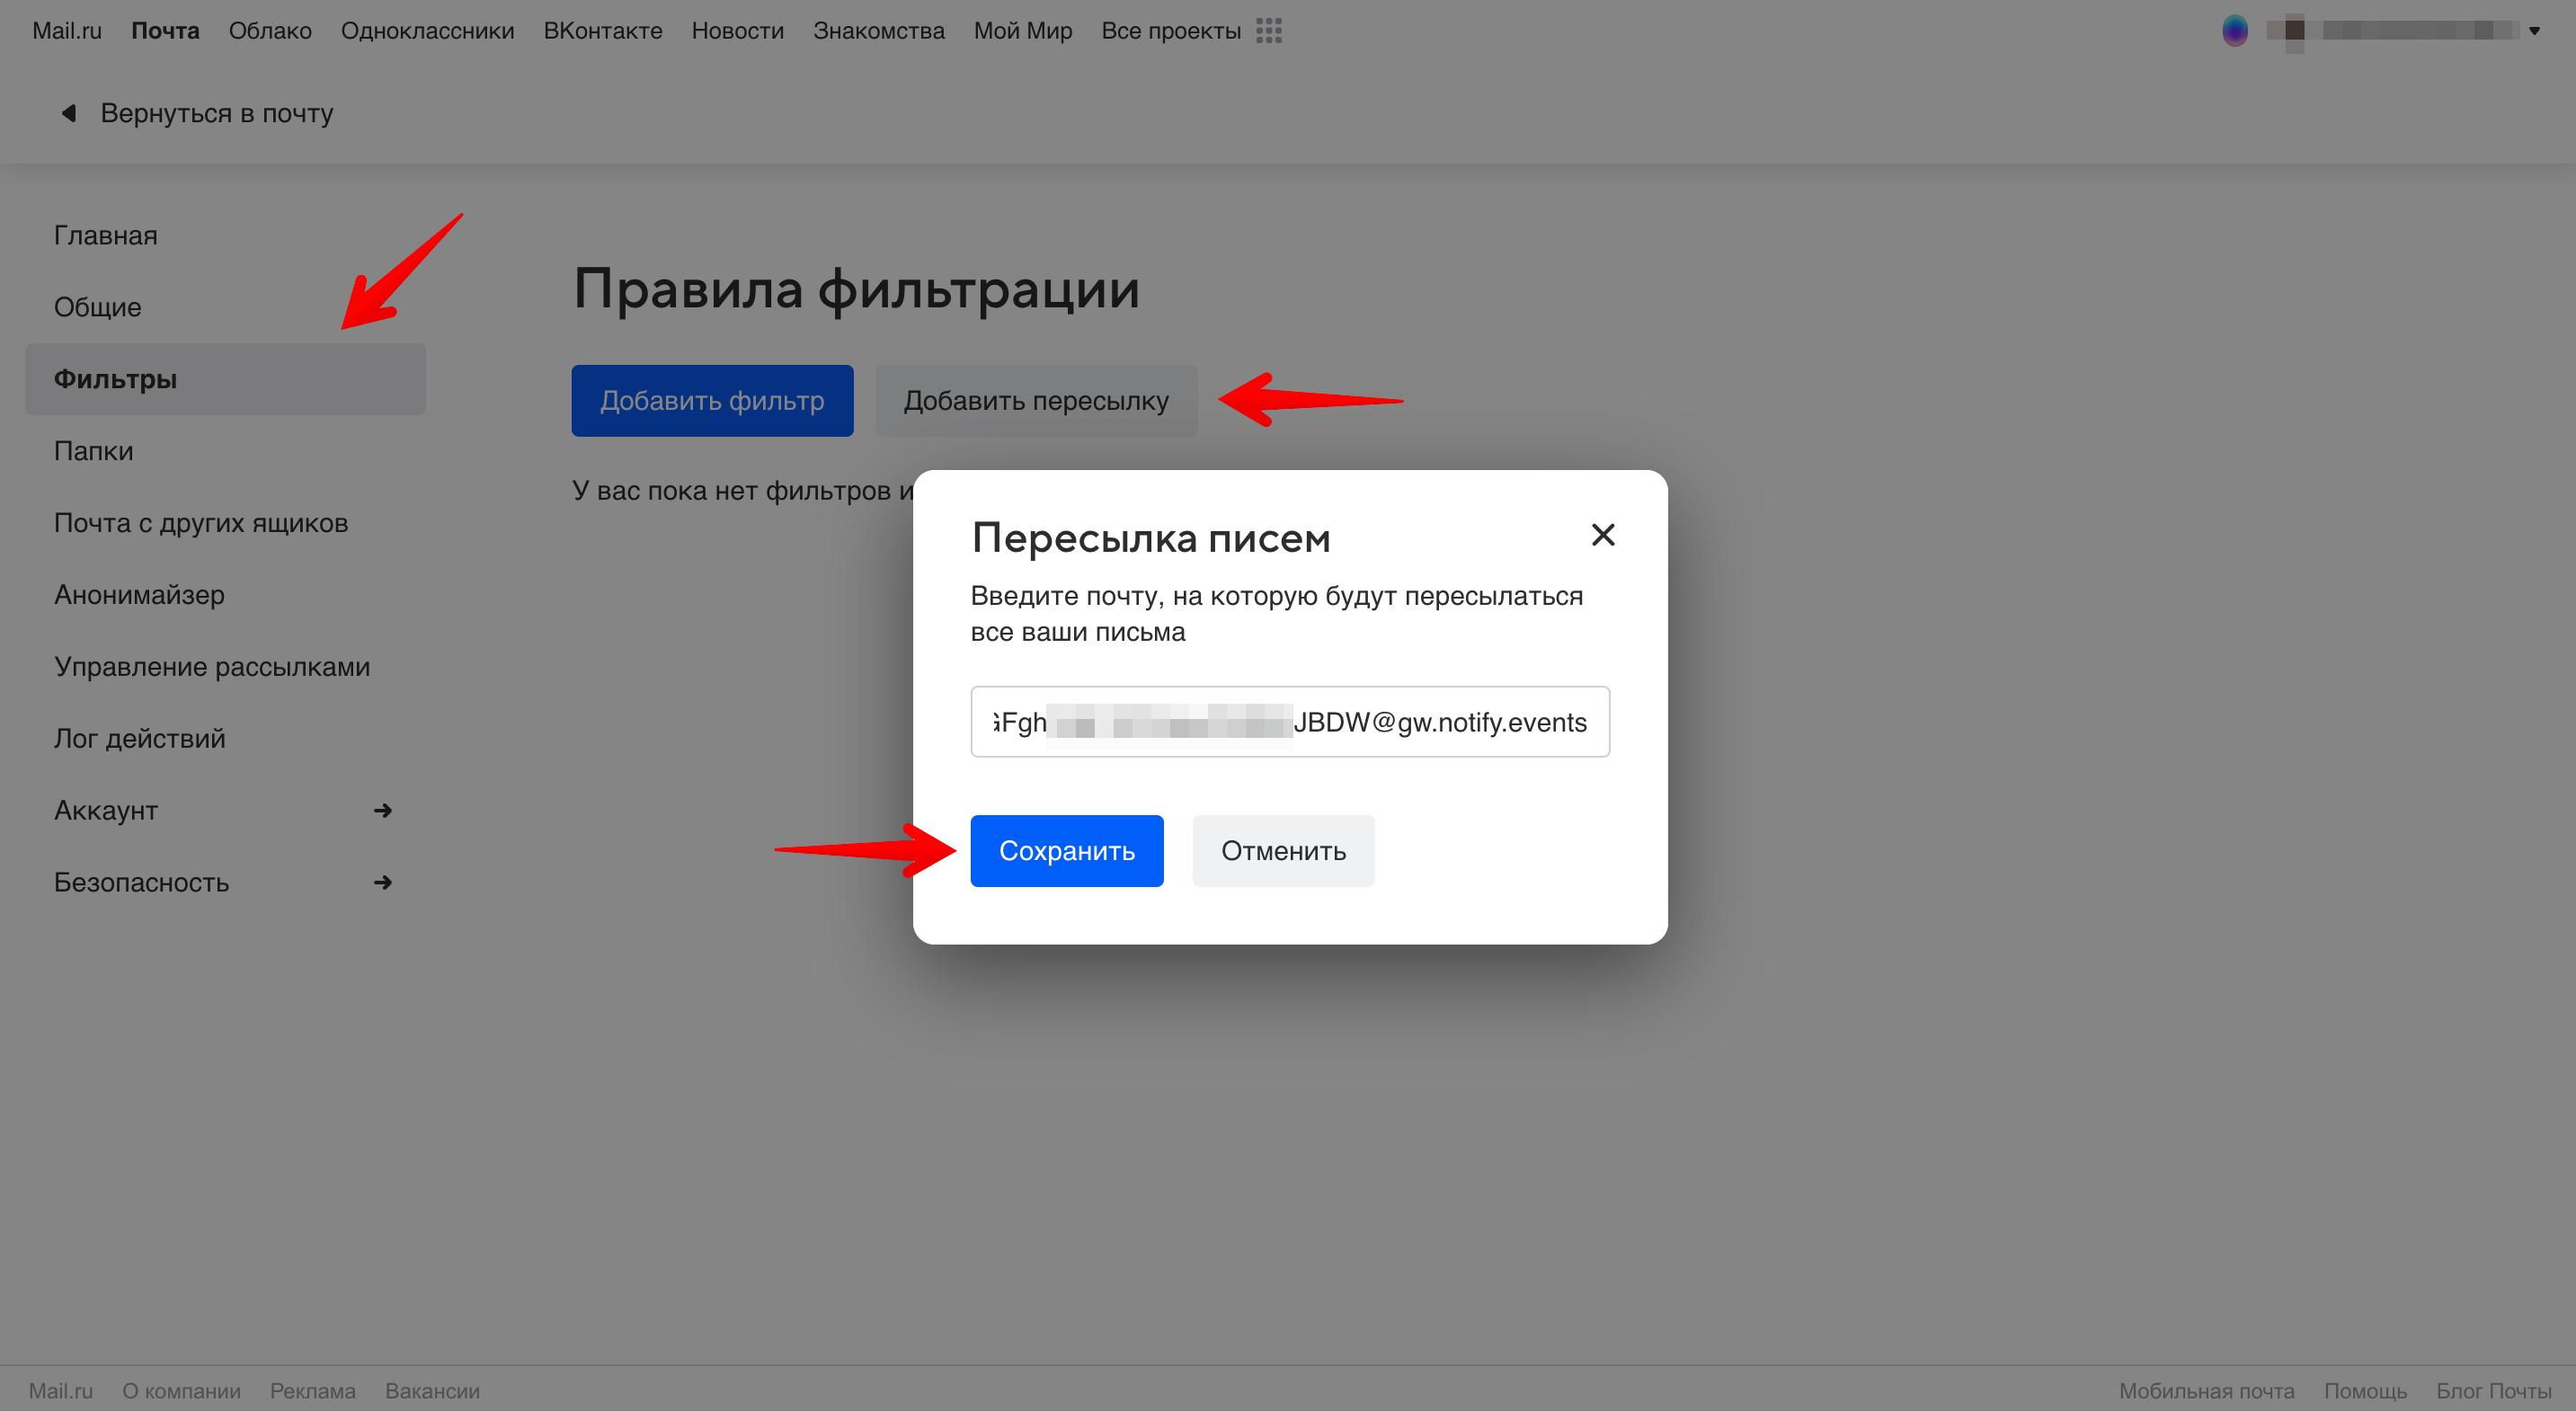 Mail.ru - новая пересылка.png